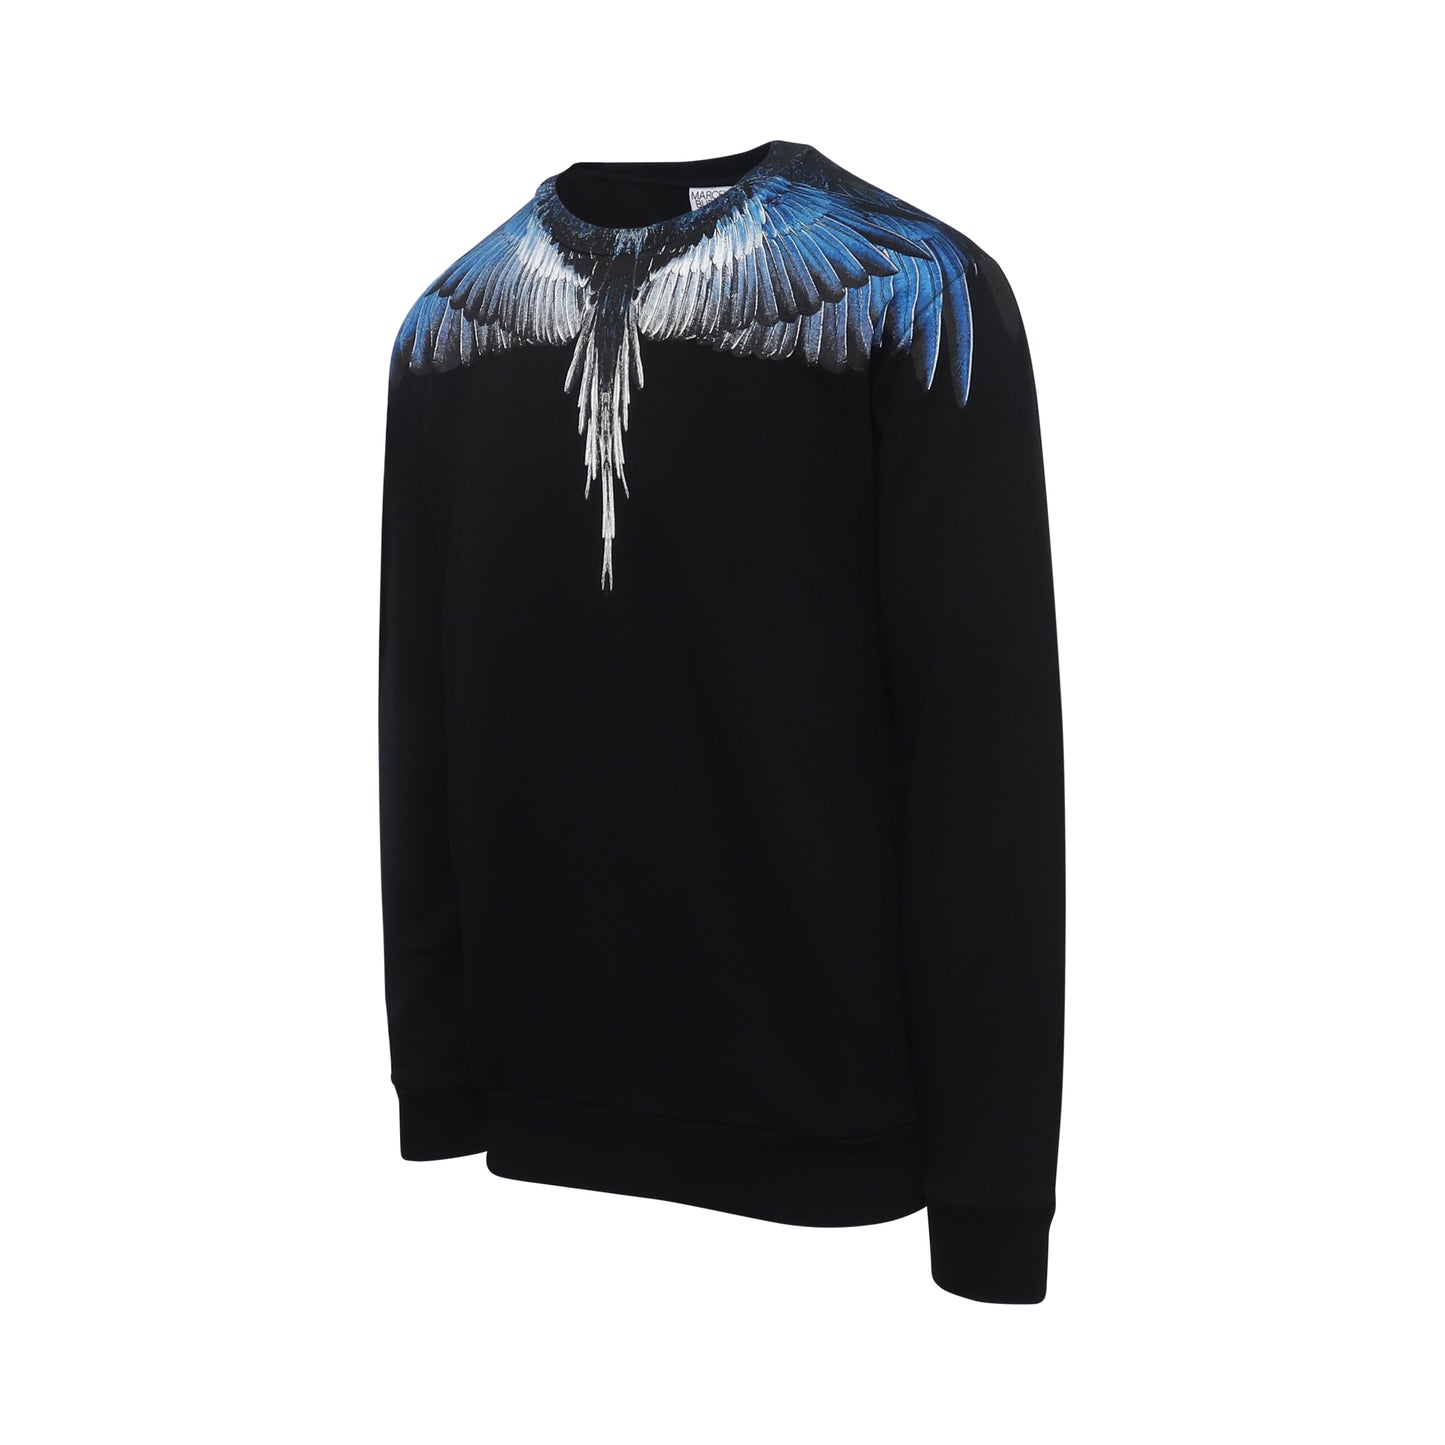 Classic Wings Print Sweatshirts in Black/Blue